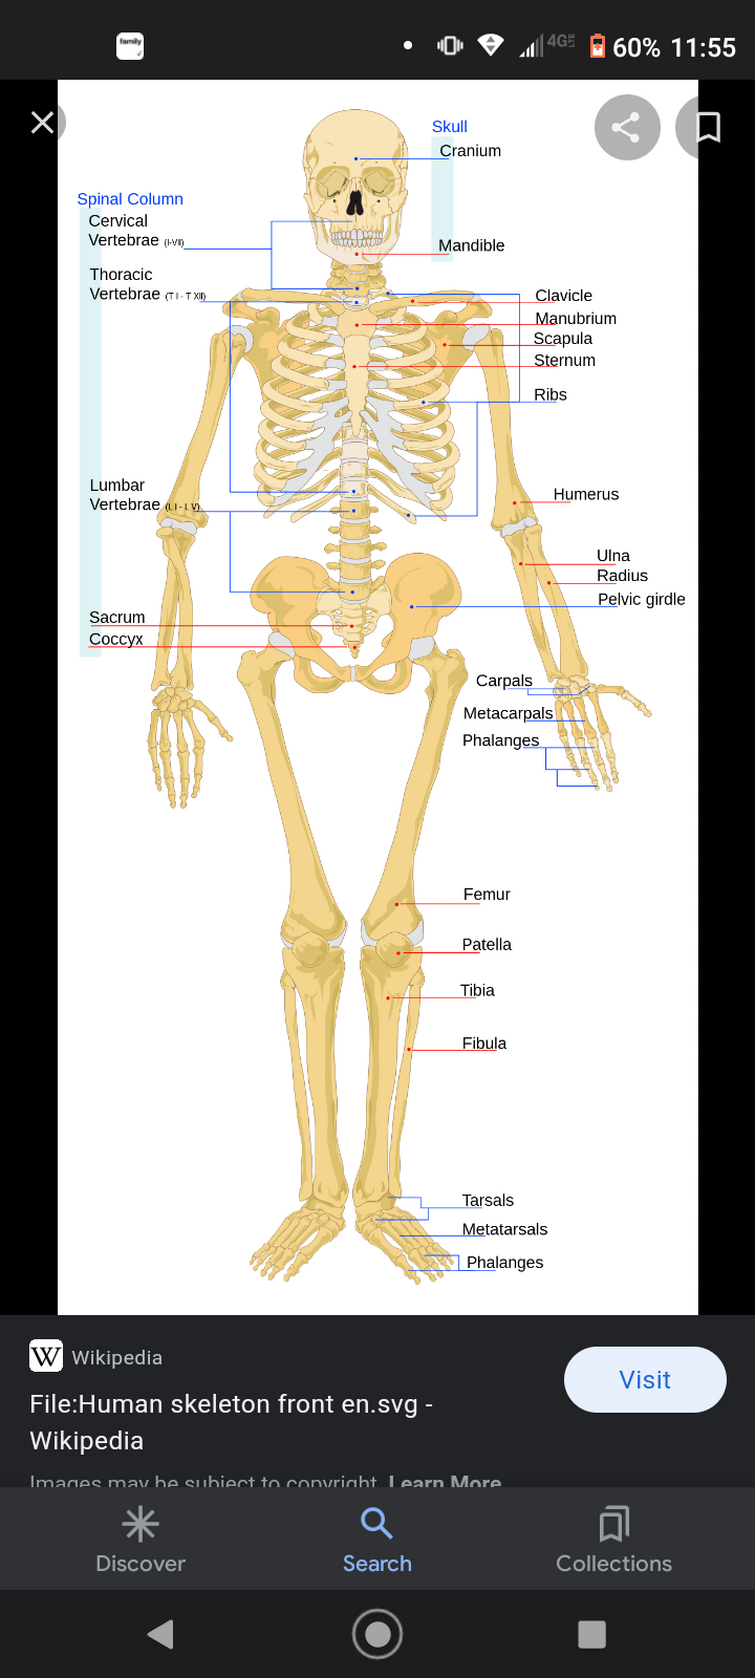 Thoracic vertebrae - Wikipedia